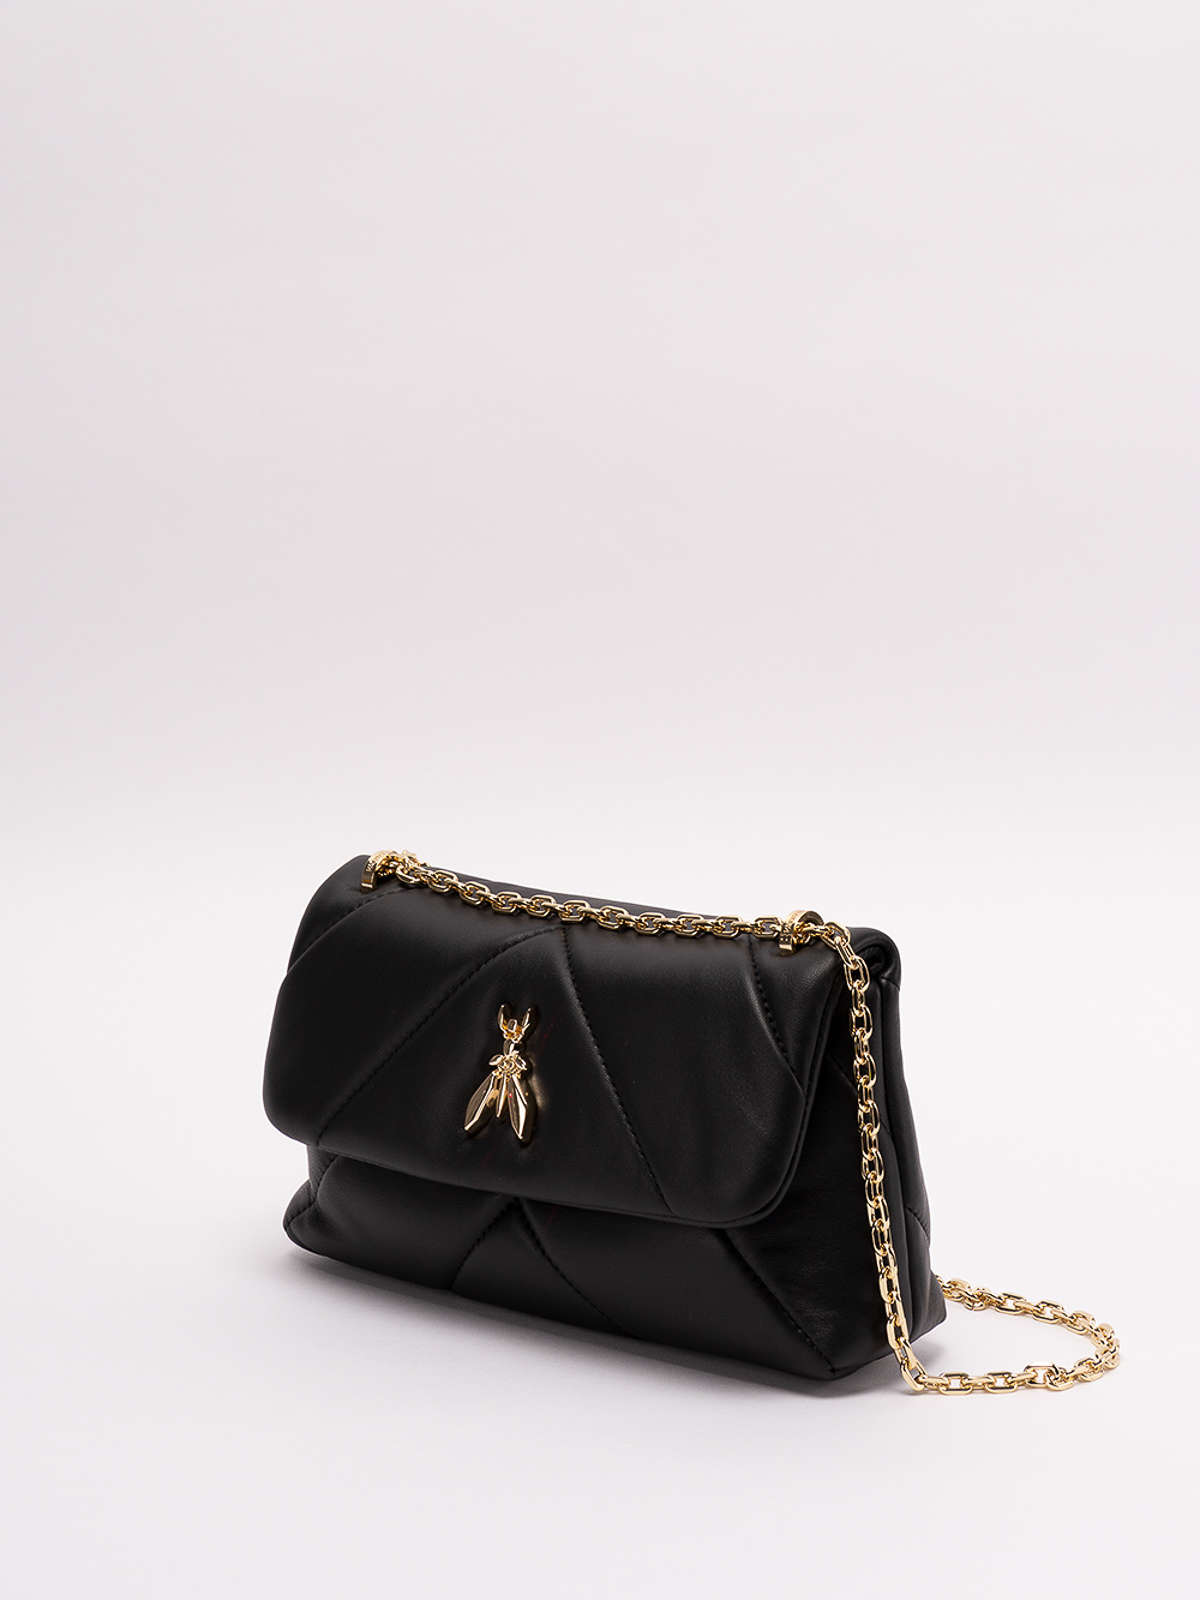 PATRIZIA PEPE Bag Leather Brown Handbag Purse Shoulder Tote Women Borse RRP  $250 | eBay